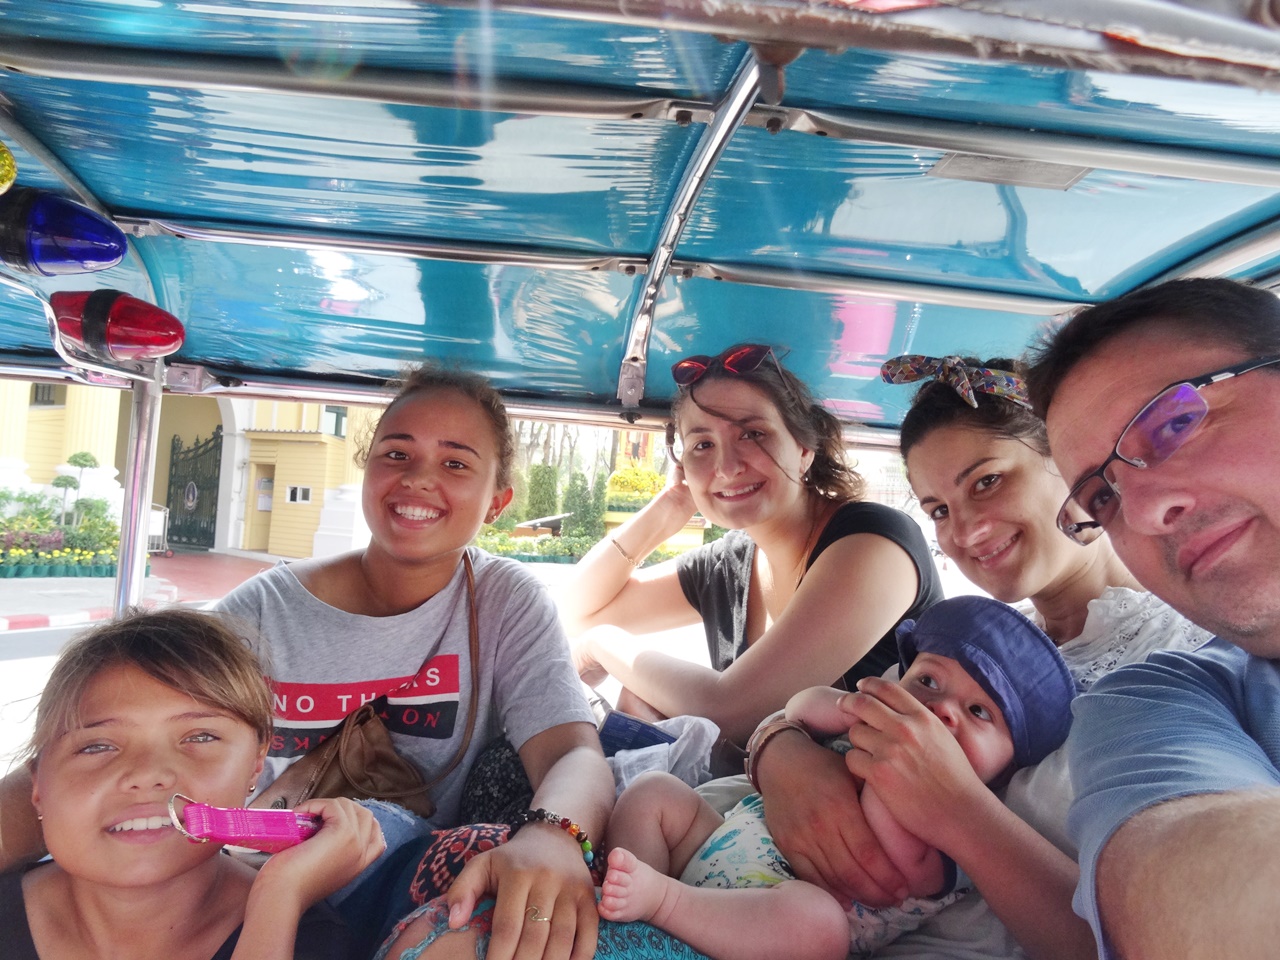 Thailande en famille nombreuse | Blog VOYAGES ET ENFANTS